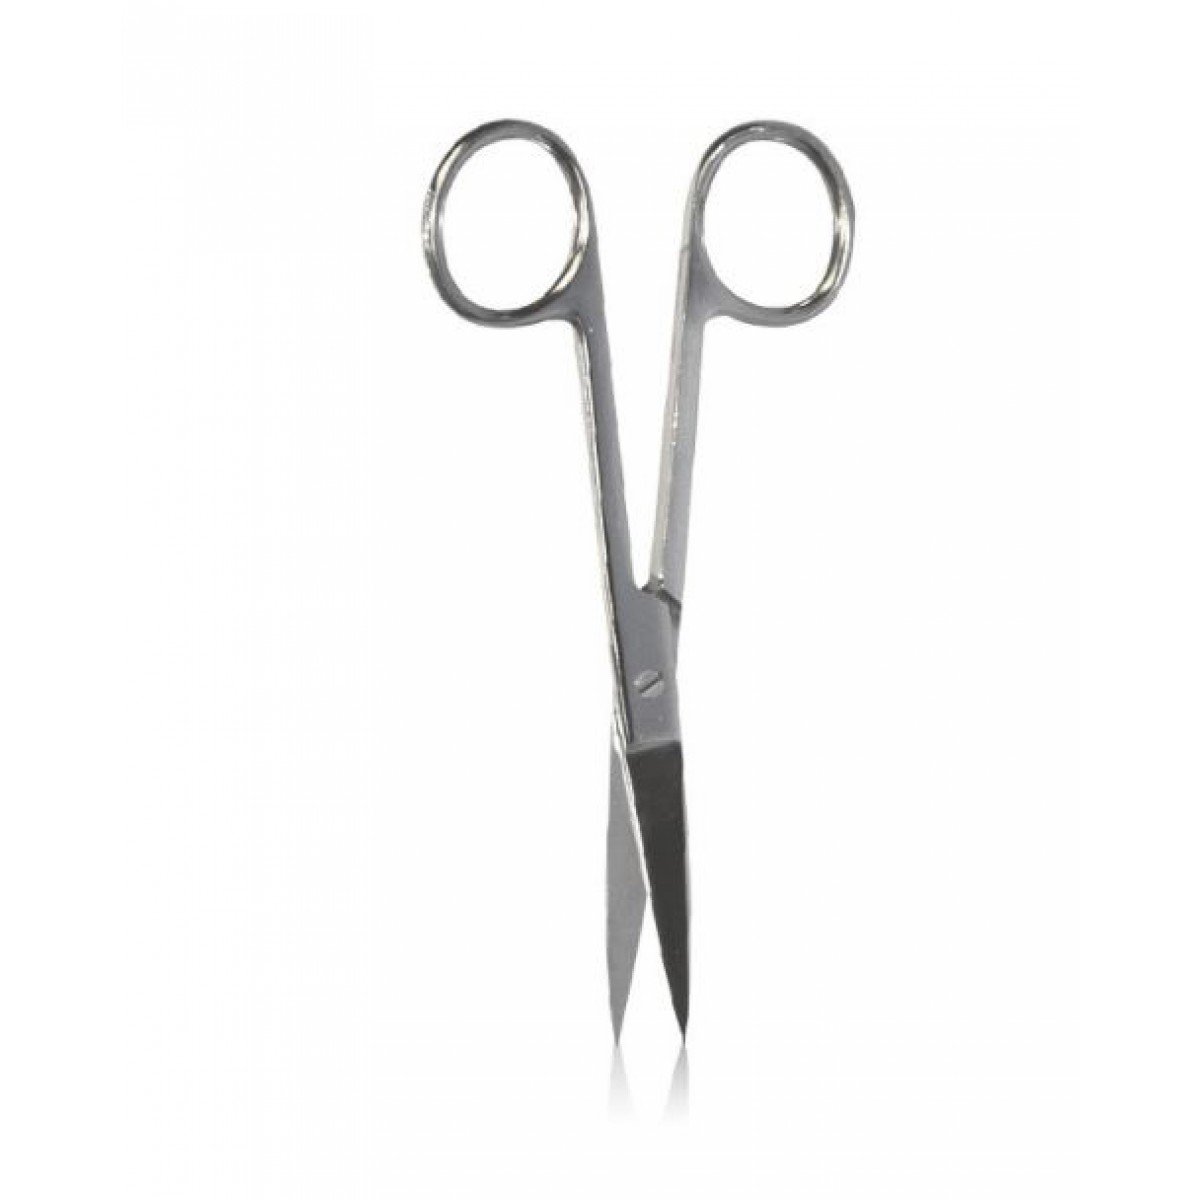 Blunt/sharp scissors